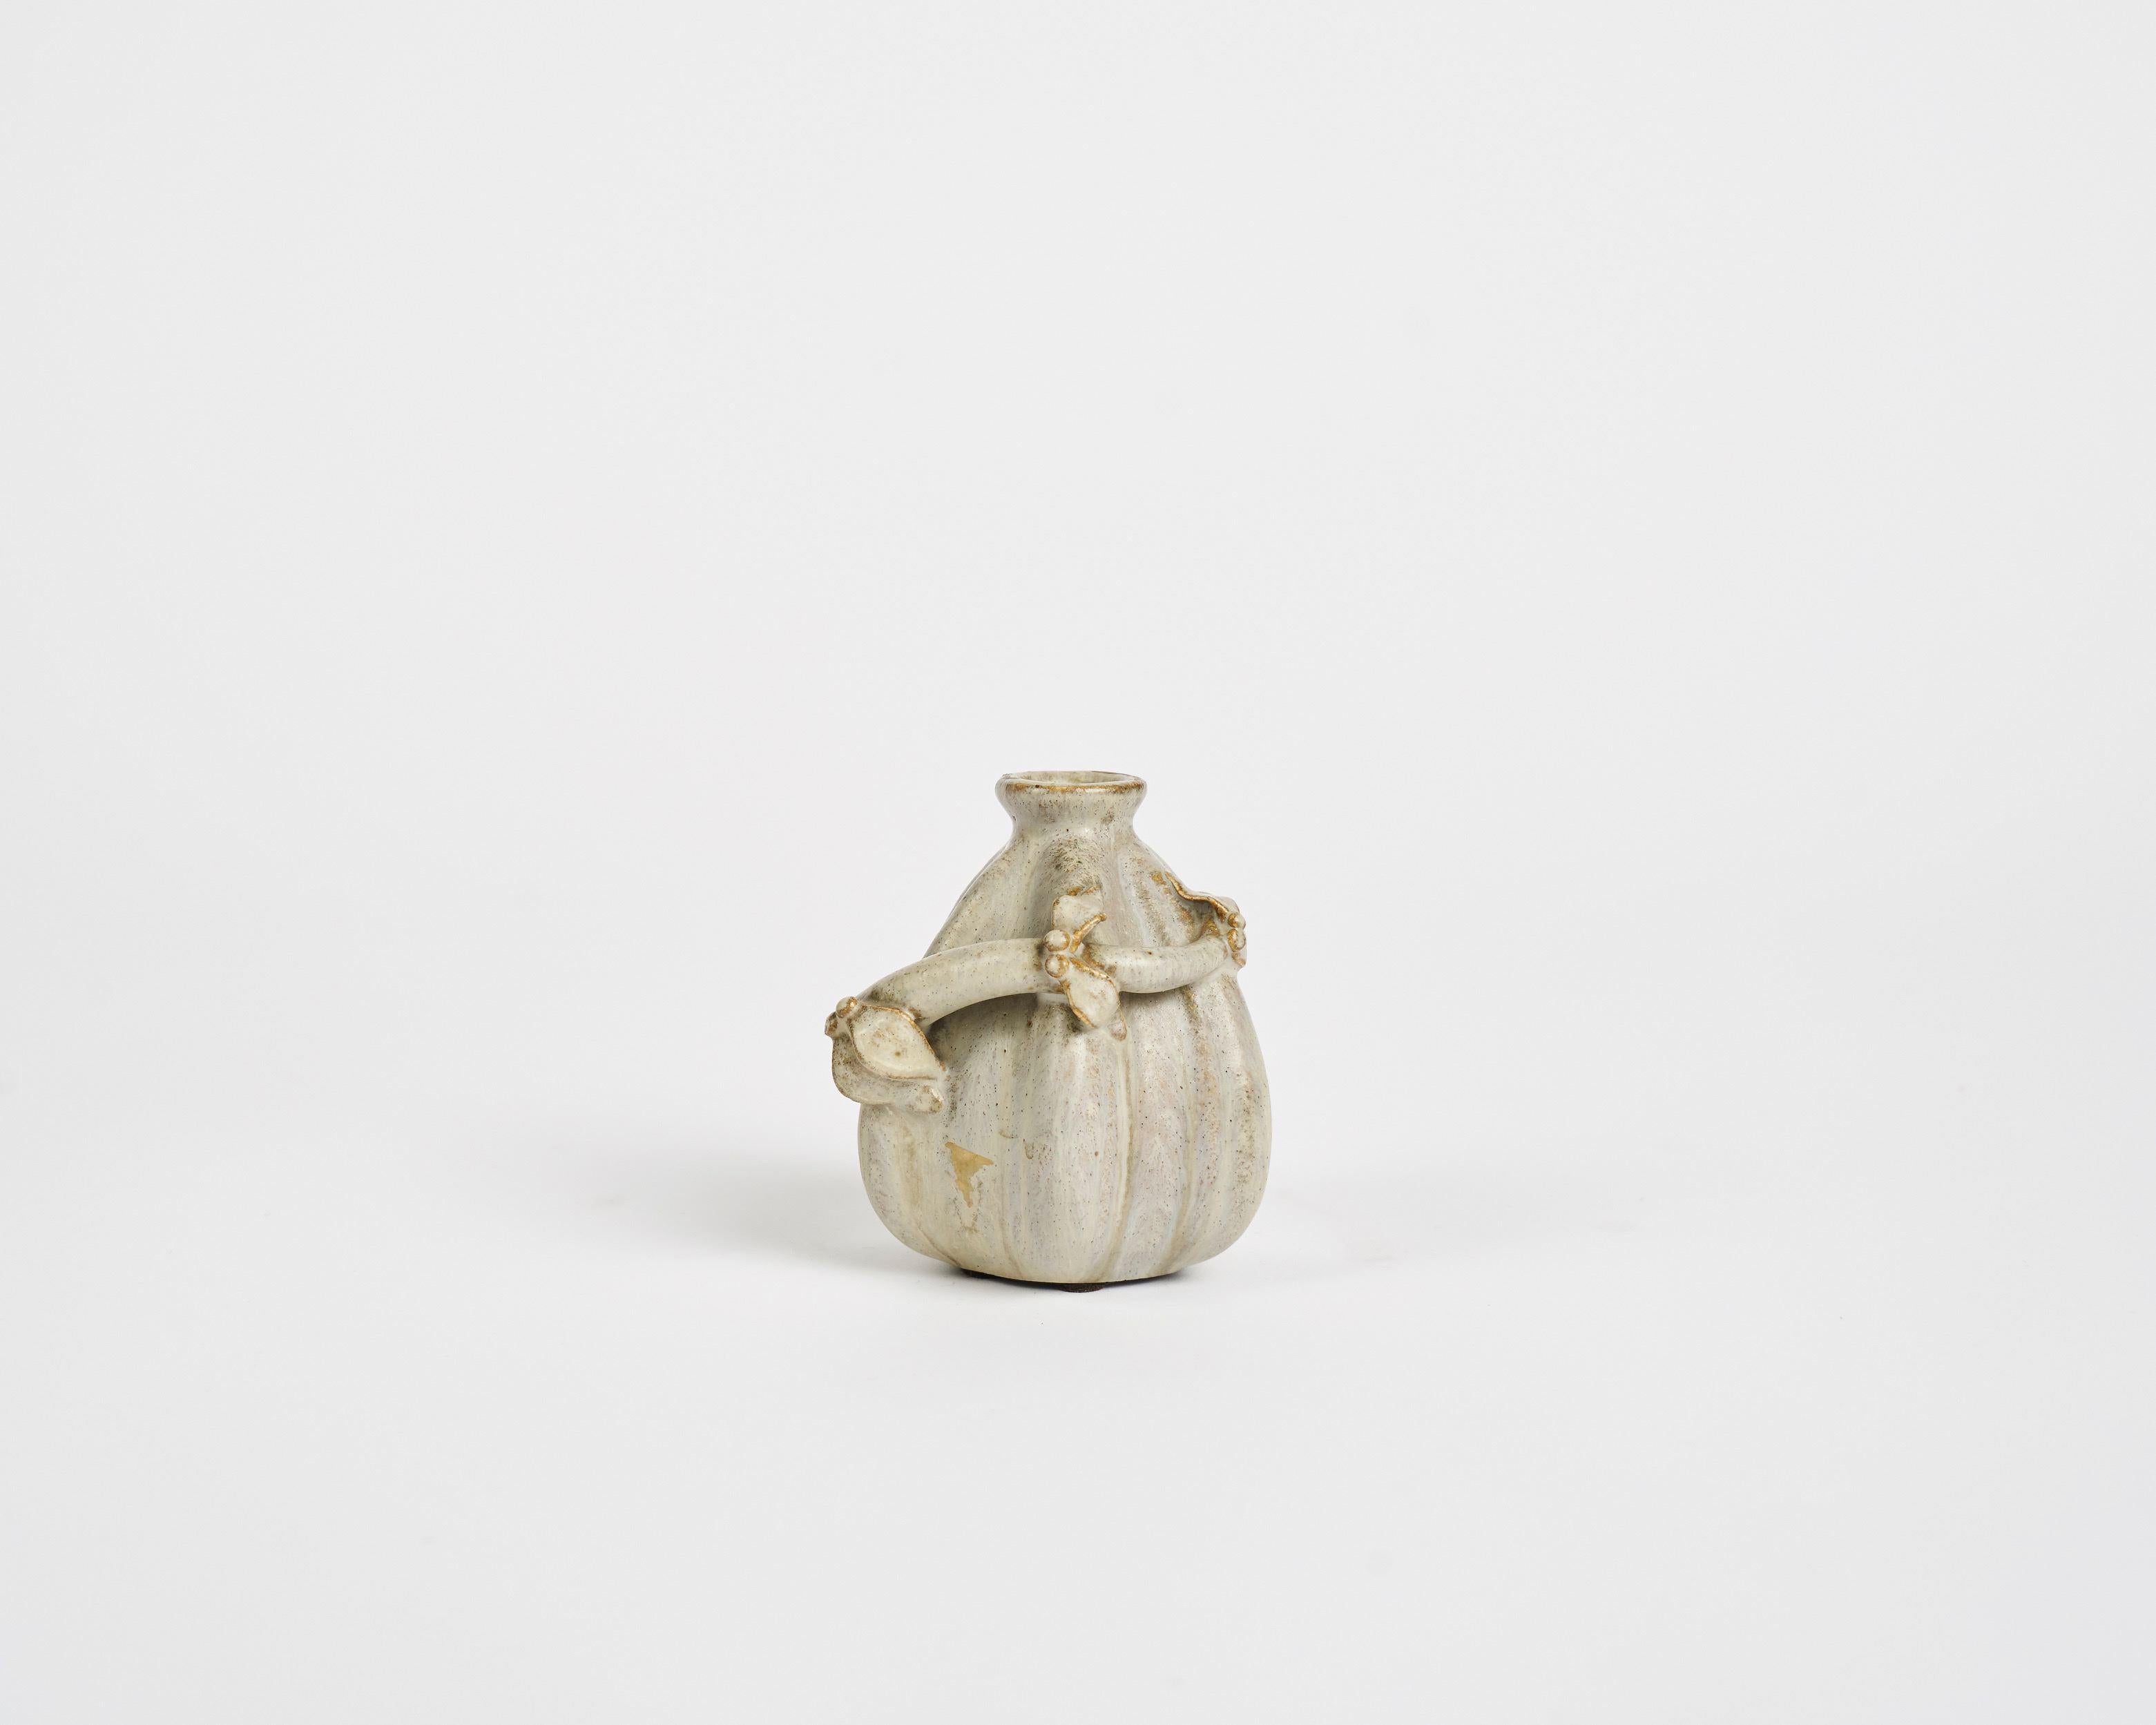 Glazed stoneware vase with vine motif by Arne Bang.

Signed: AB.